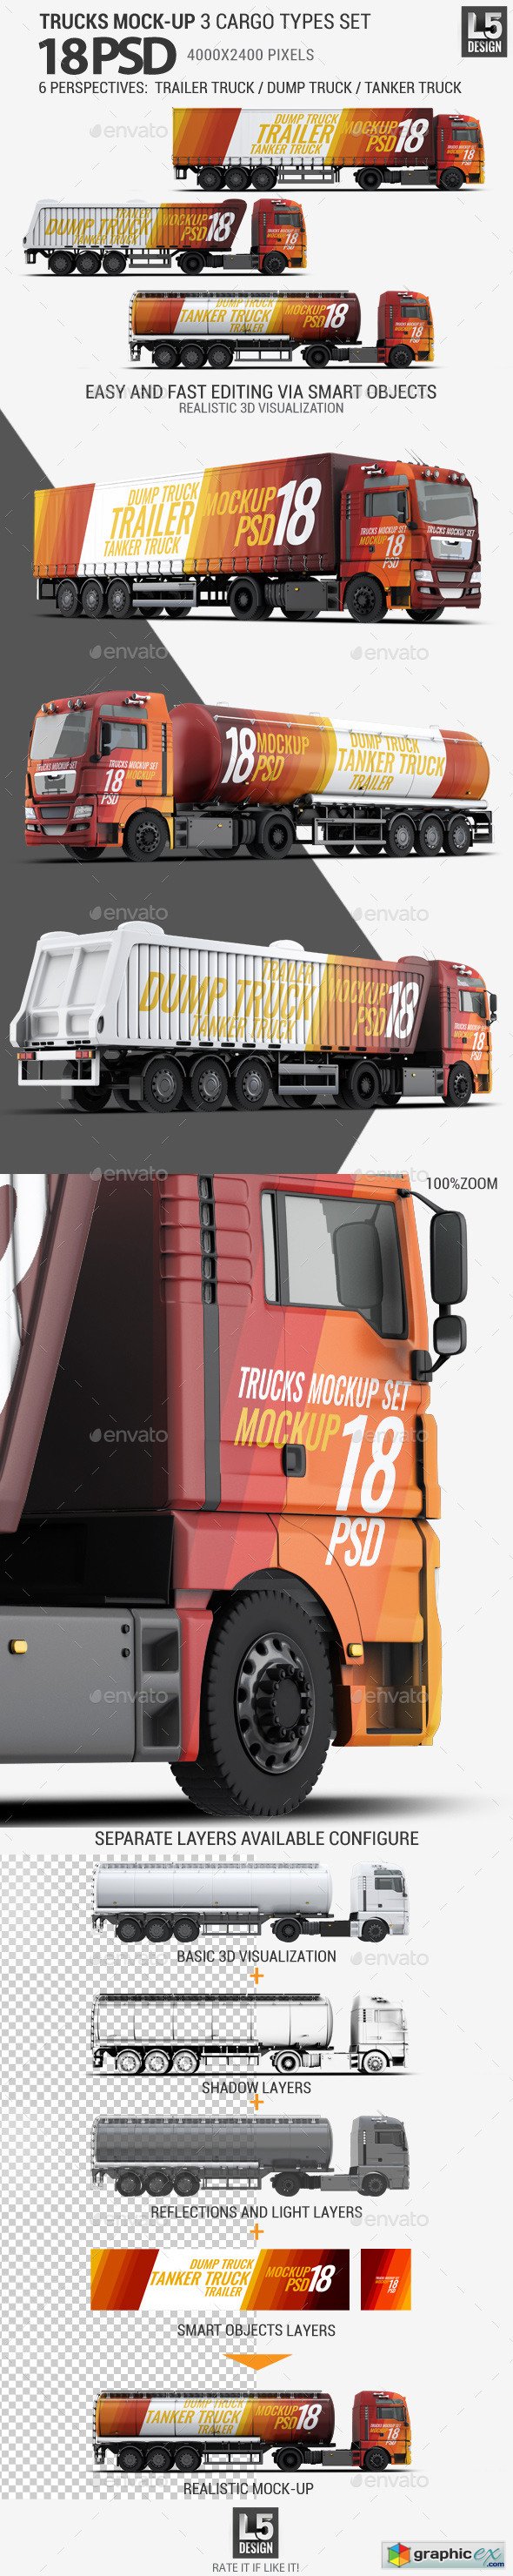 Trucks Mock-up 3 Cargo Types Set